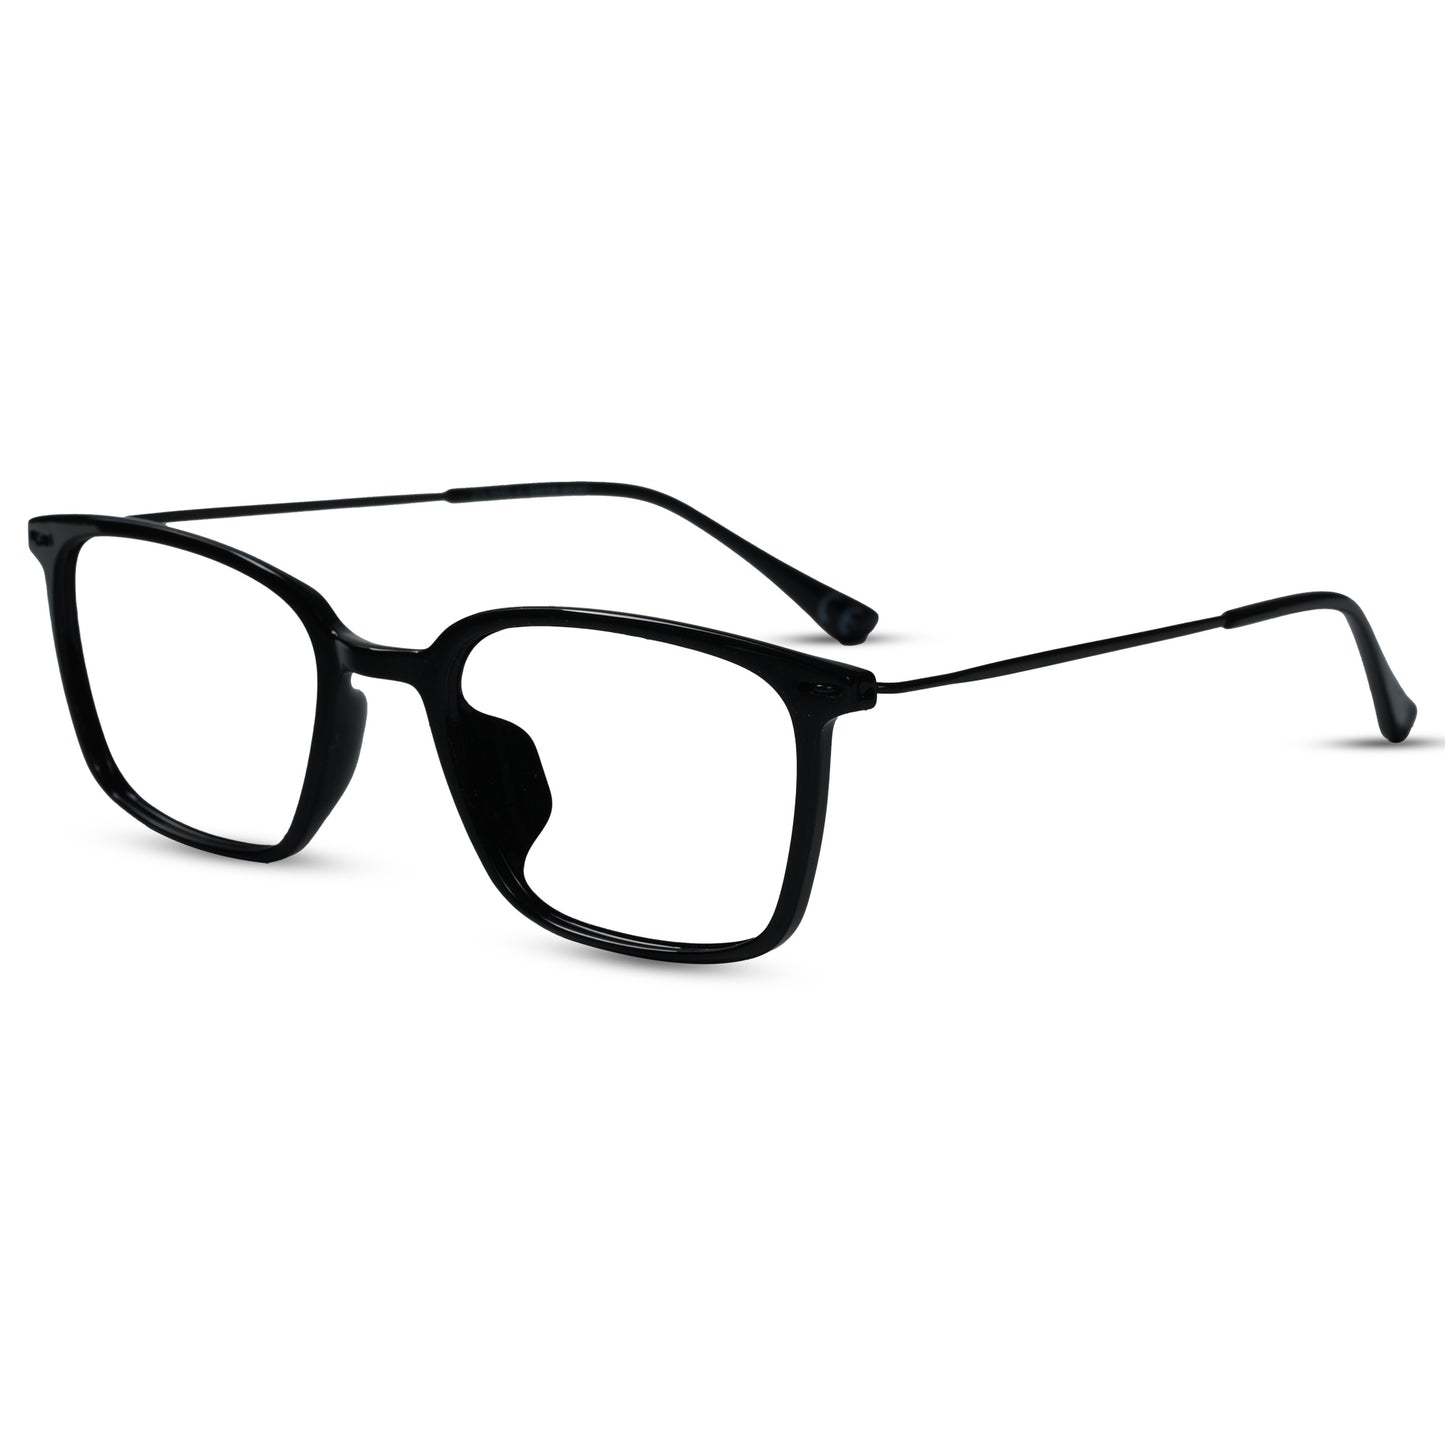 2.5 NVG Computer Glasses Black Square Eyeglasses